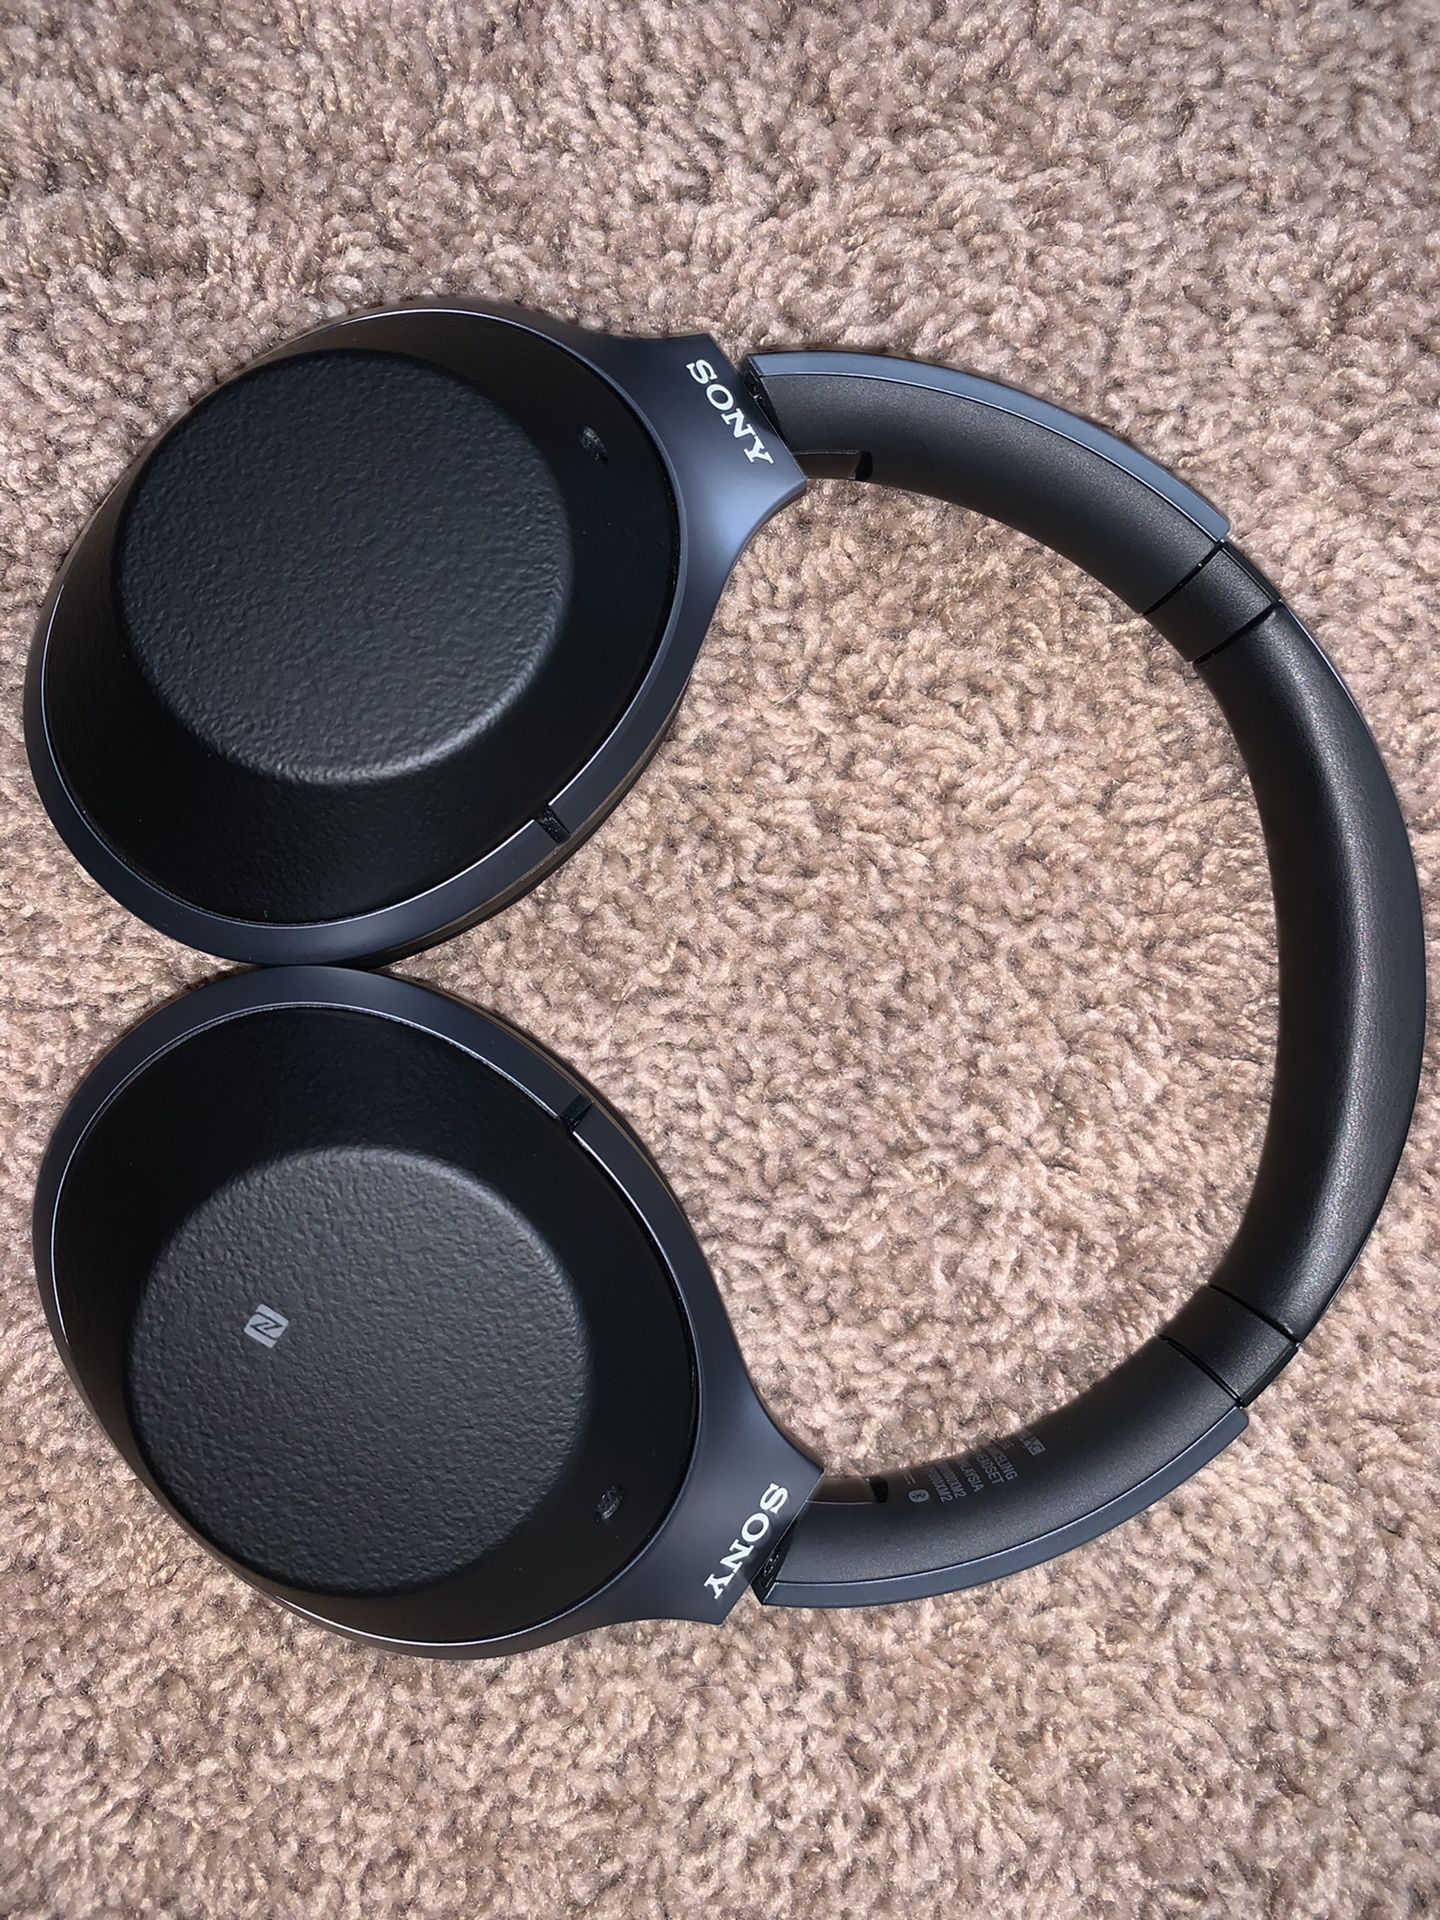 Sony Noise-Cancelling Wireless Headphones